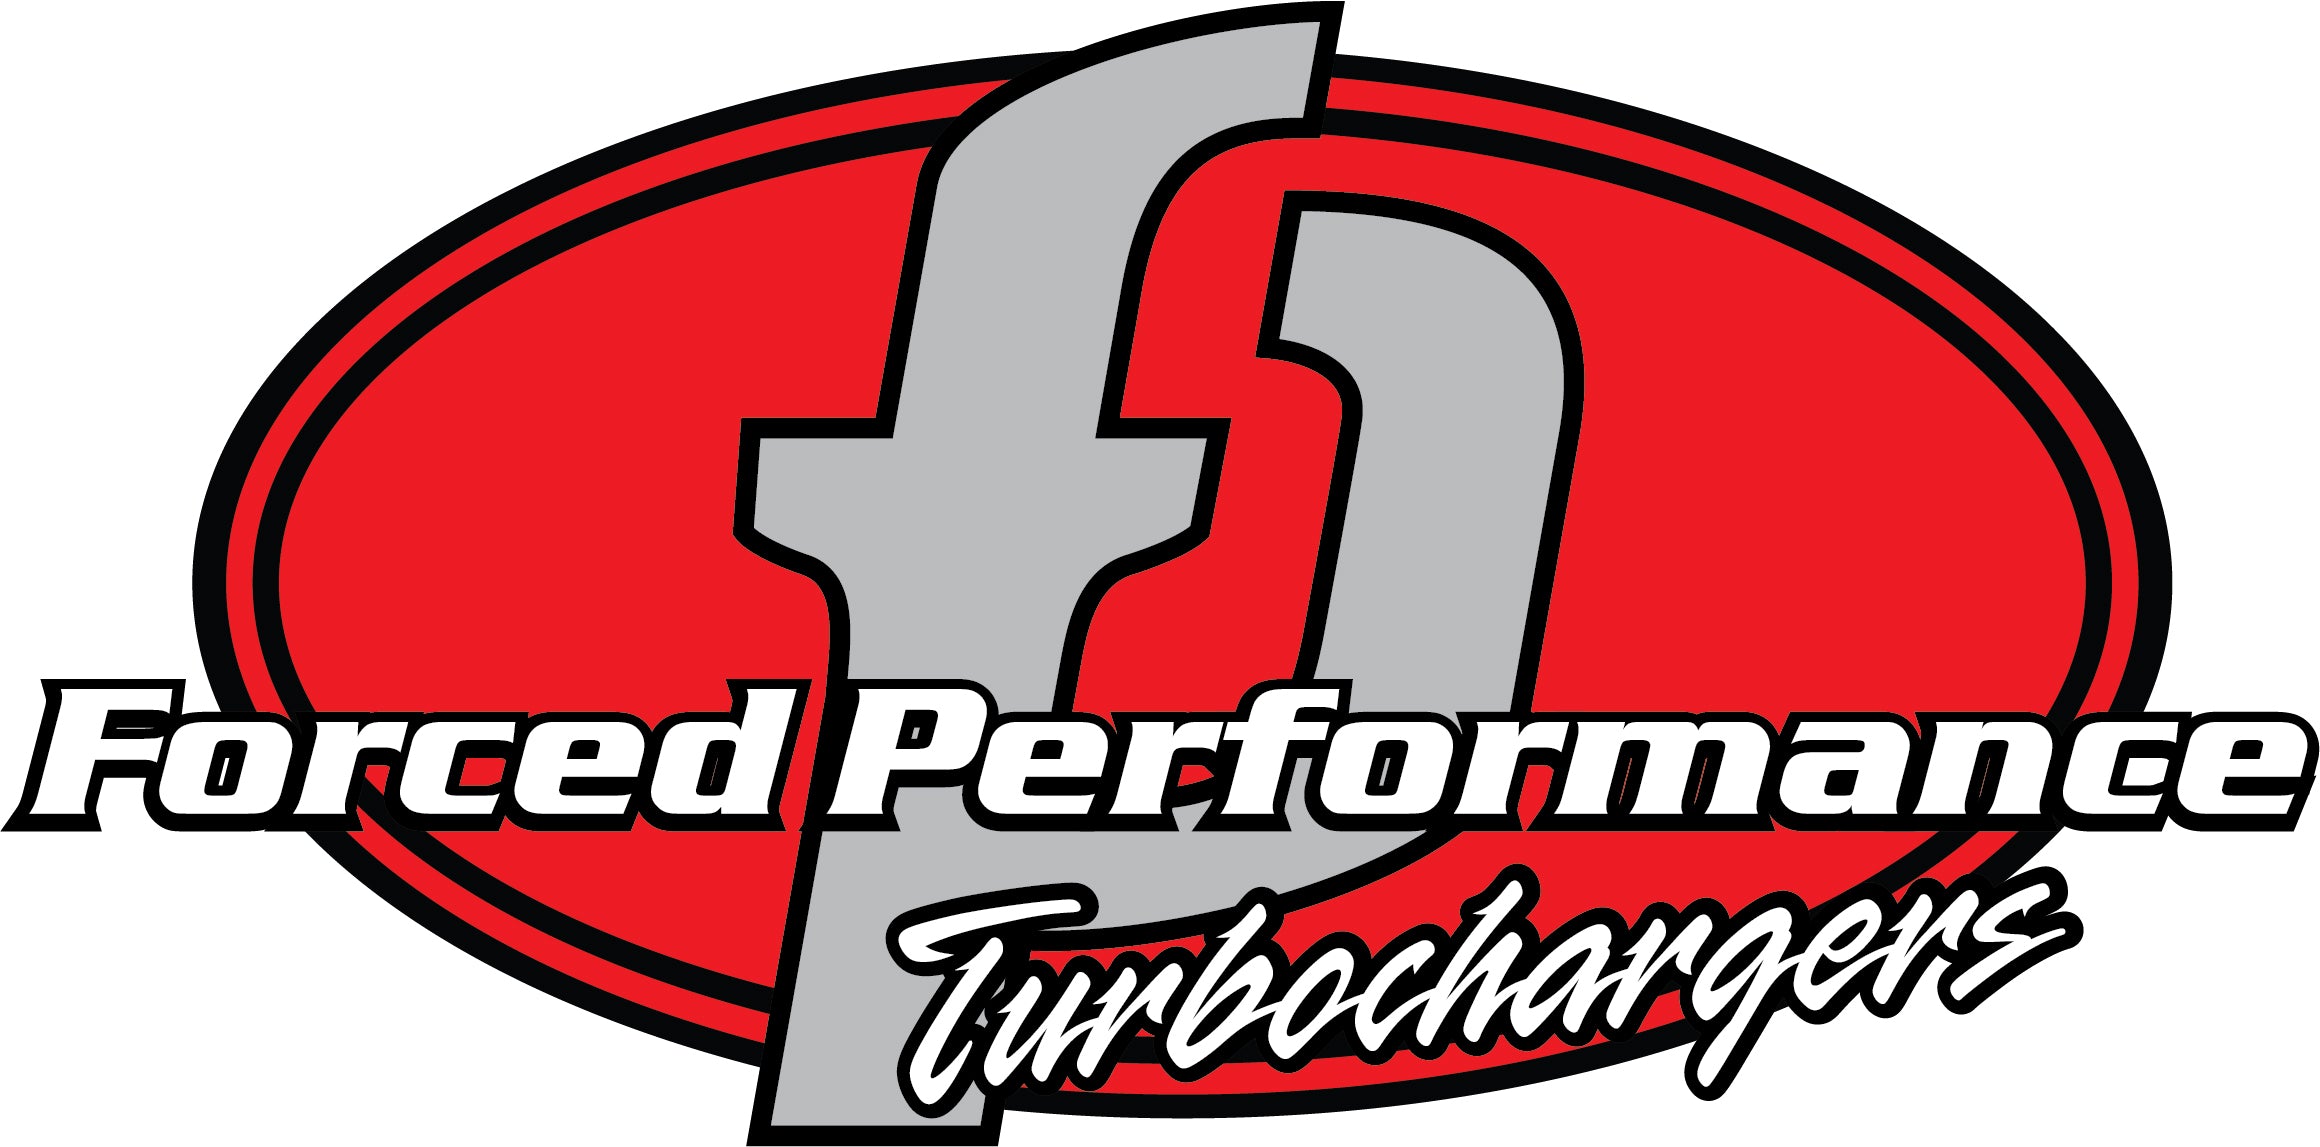 Vehicle performance turbo icon. Car turbocharger sign. Performance